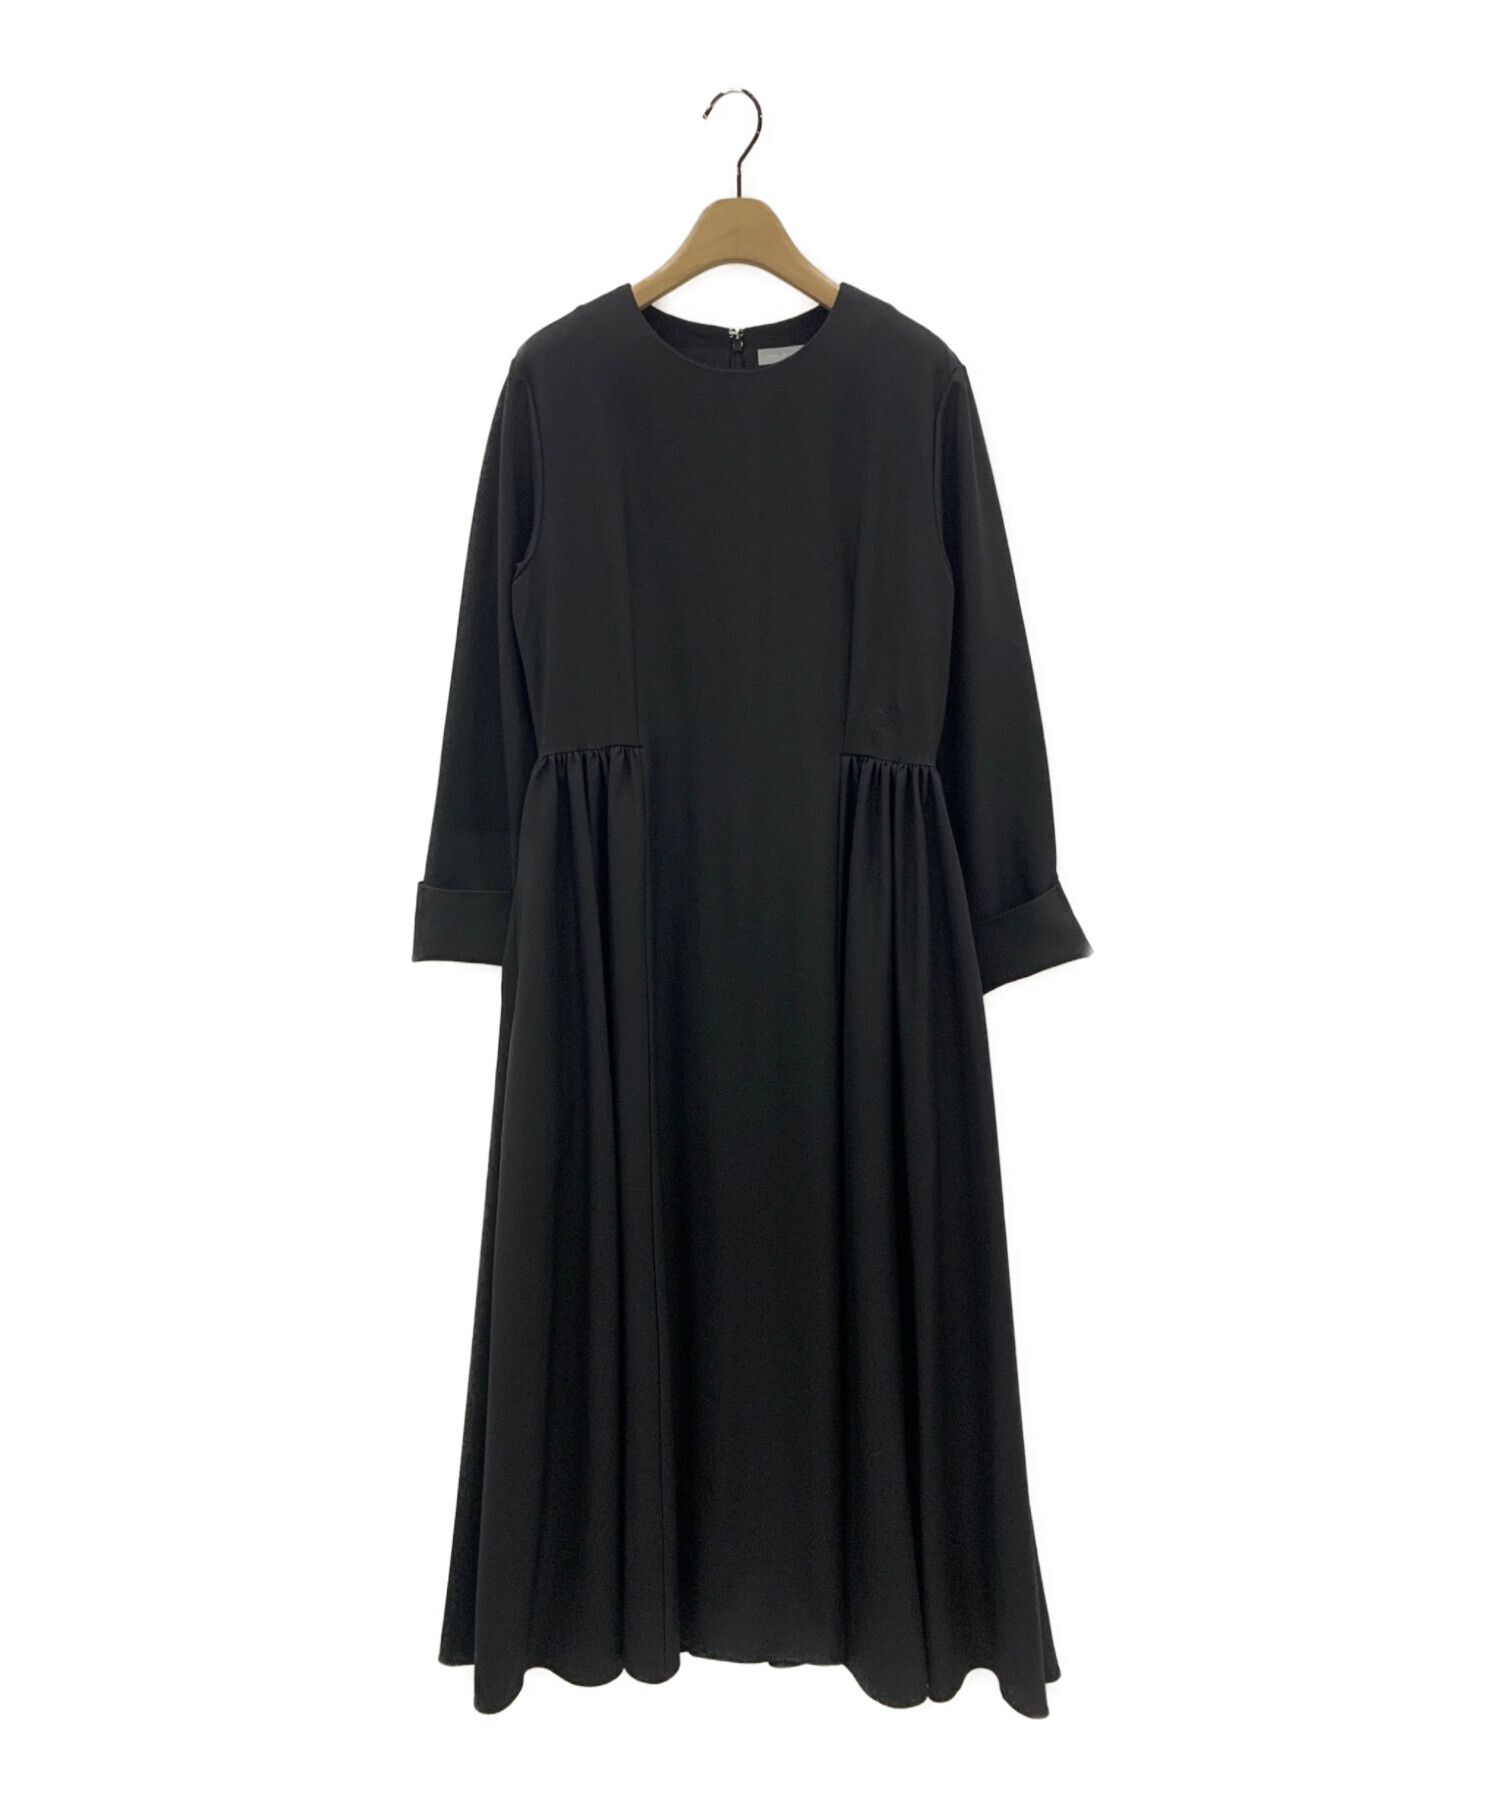 THE 9 SHOP (ザ ナインショップ) EVERYDAY DRESS mature ブラック サイズ:L